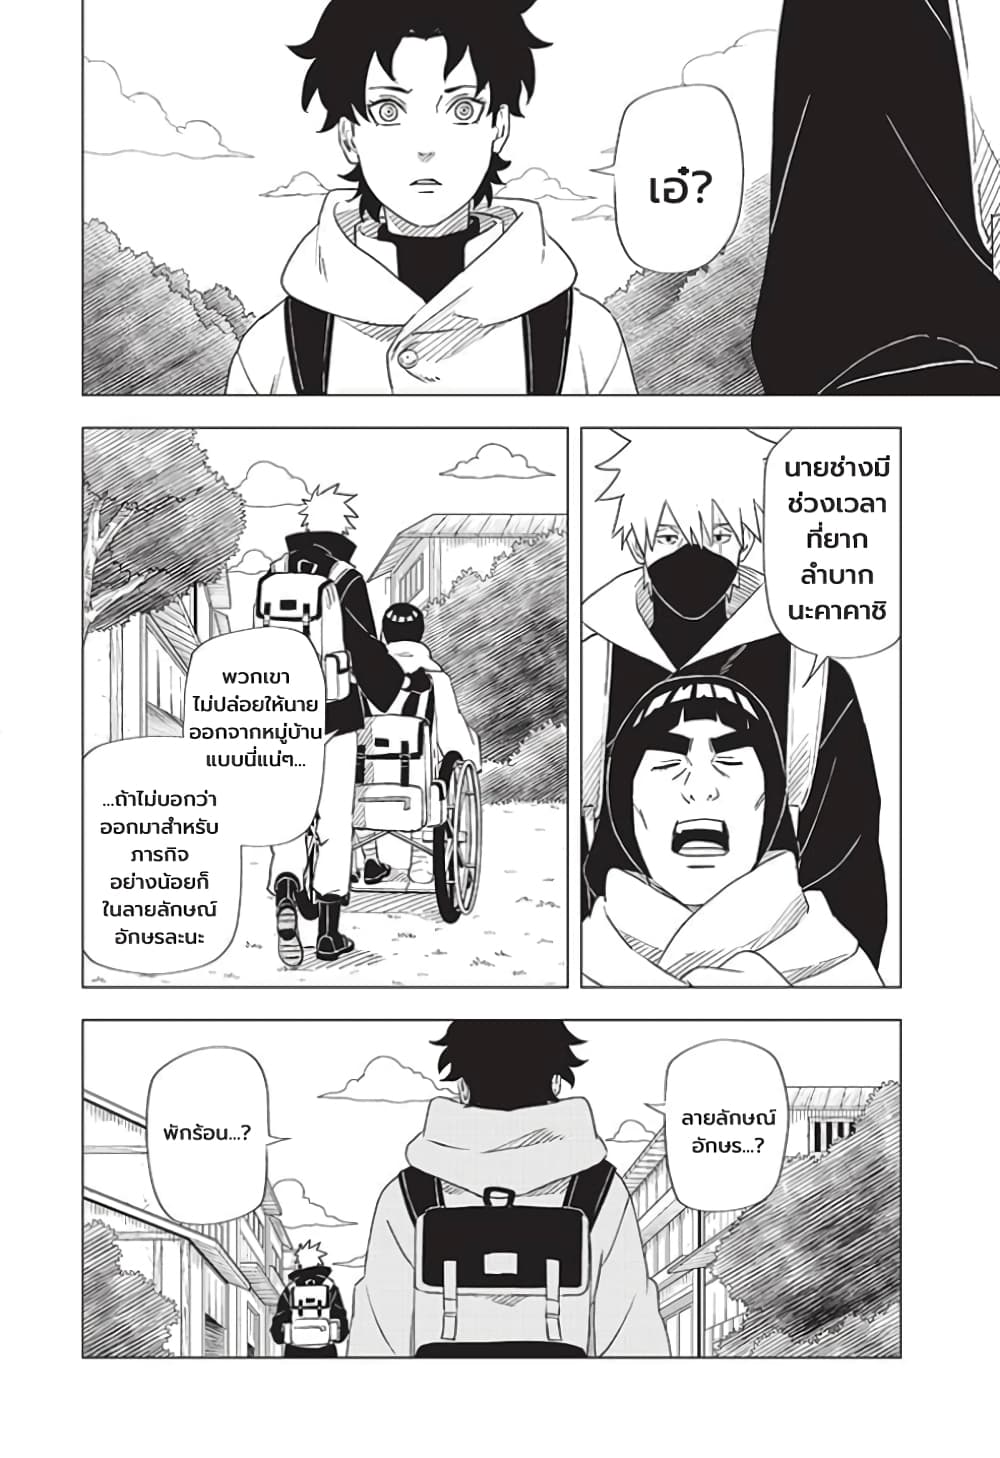 Naruto Konoha’s Story – The Steam Ninja Scrolls The Manga ตอนที่ 3 (26)